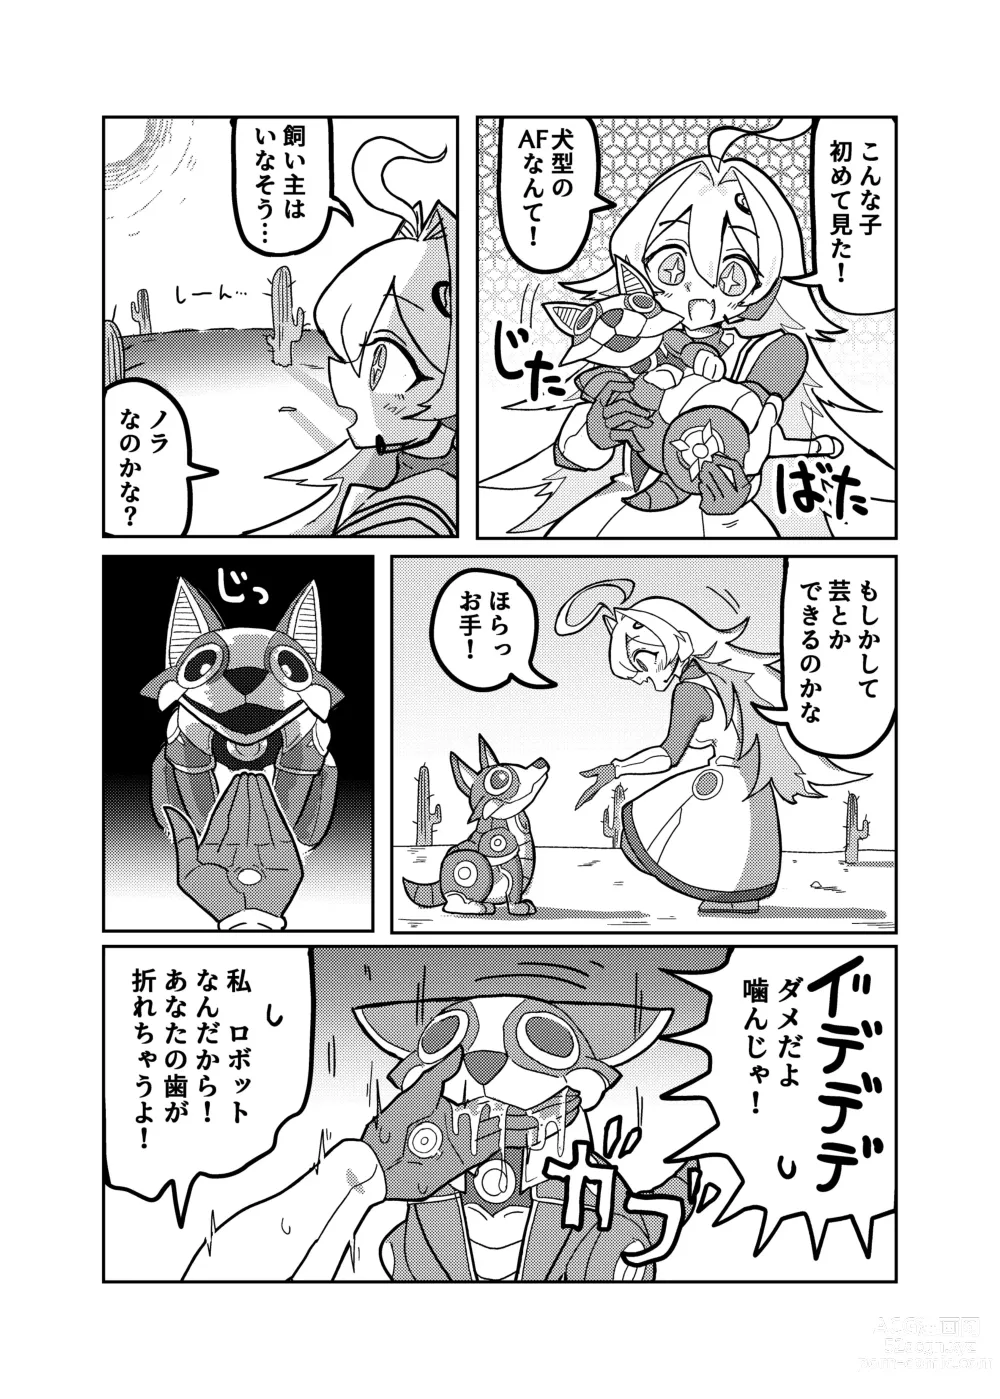 Page 6 of doujinshi Ralmia vs Robopup